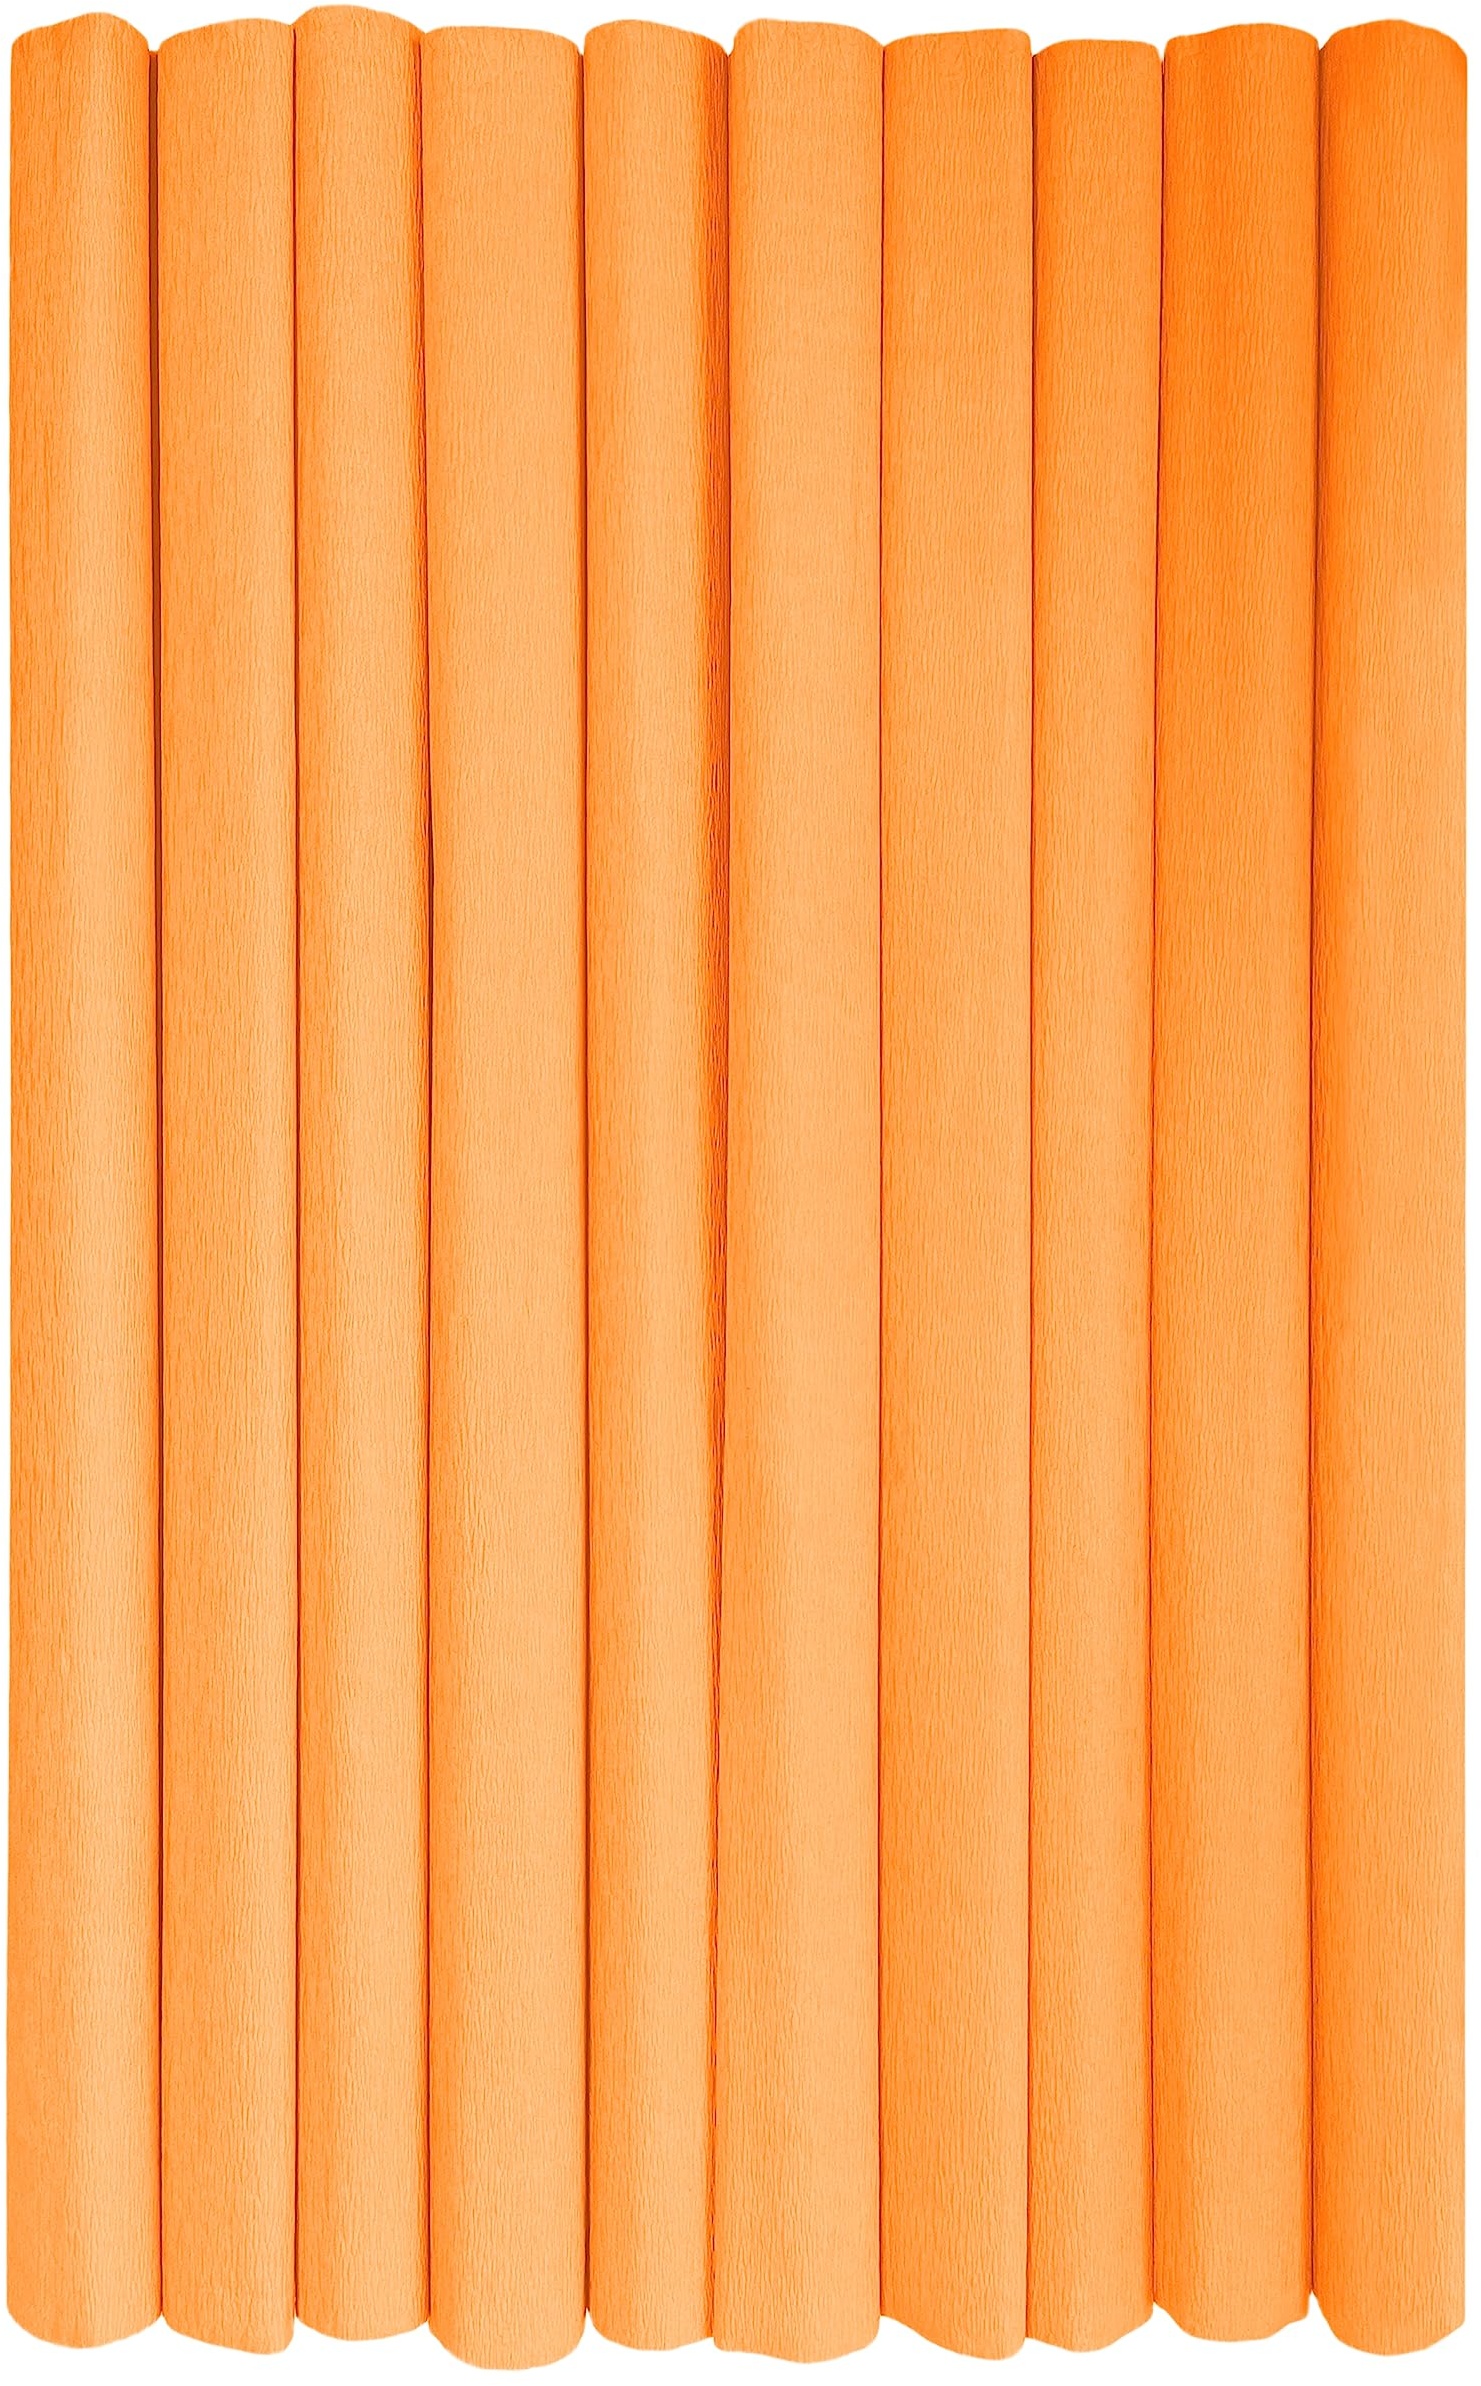 Interdruk - Crepe Paper Rolls for Kids, DIY and Decorations - Pack of 10 Reels (50cm x 200cm, 28g/m2) - 05 Light Orange